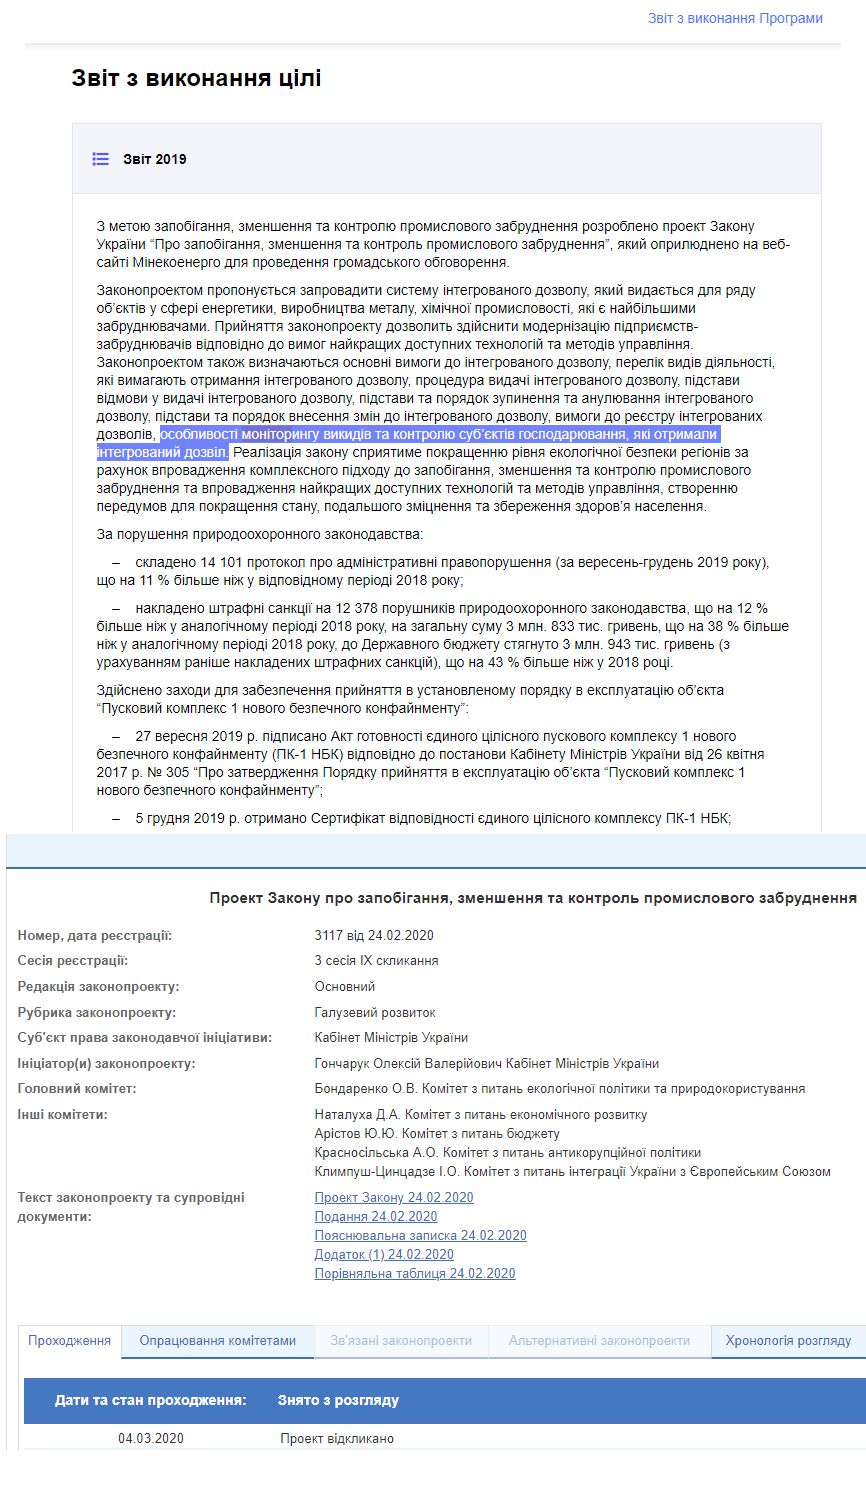 https://program.kmu.gov.ua/meta/ukrainec-zive-u-spriatlivomu-ta-cistomu-navkolisnomu-seredovisi